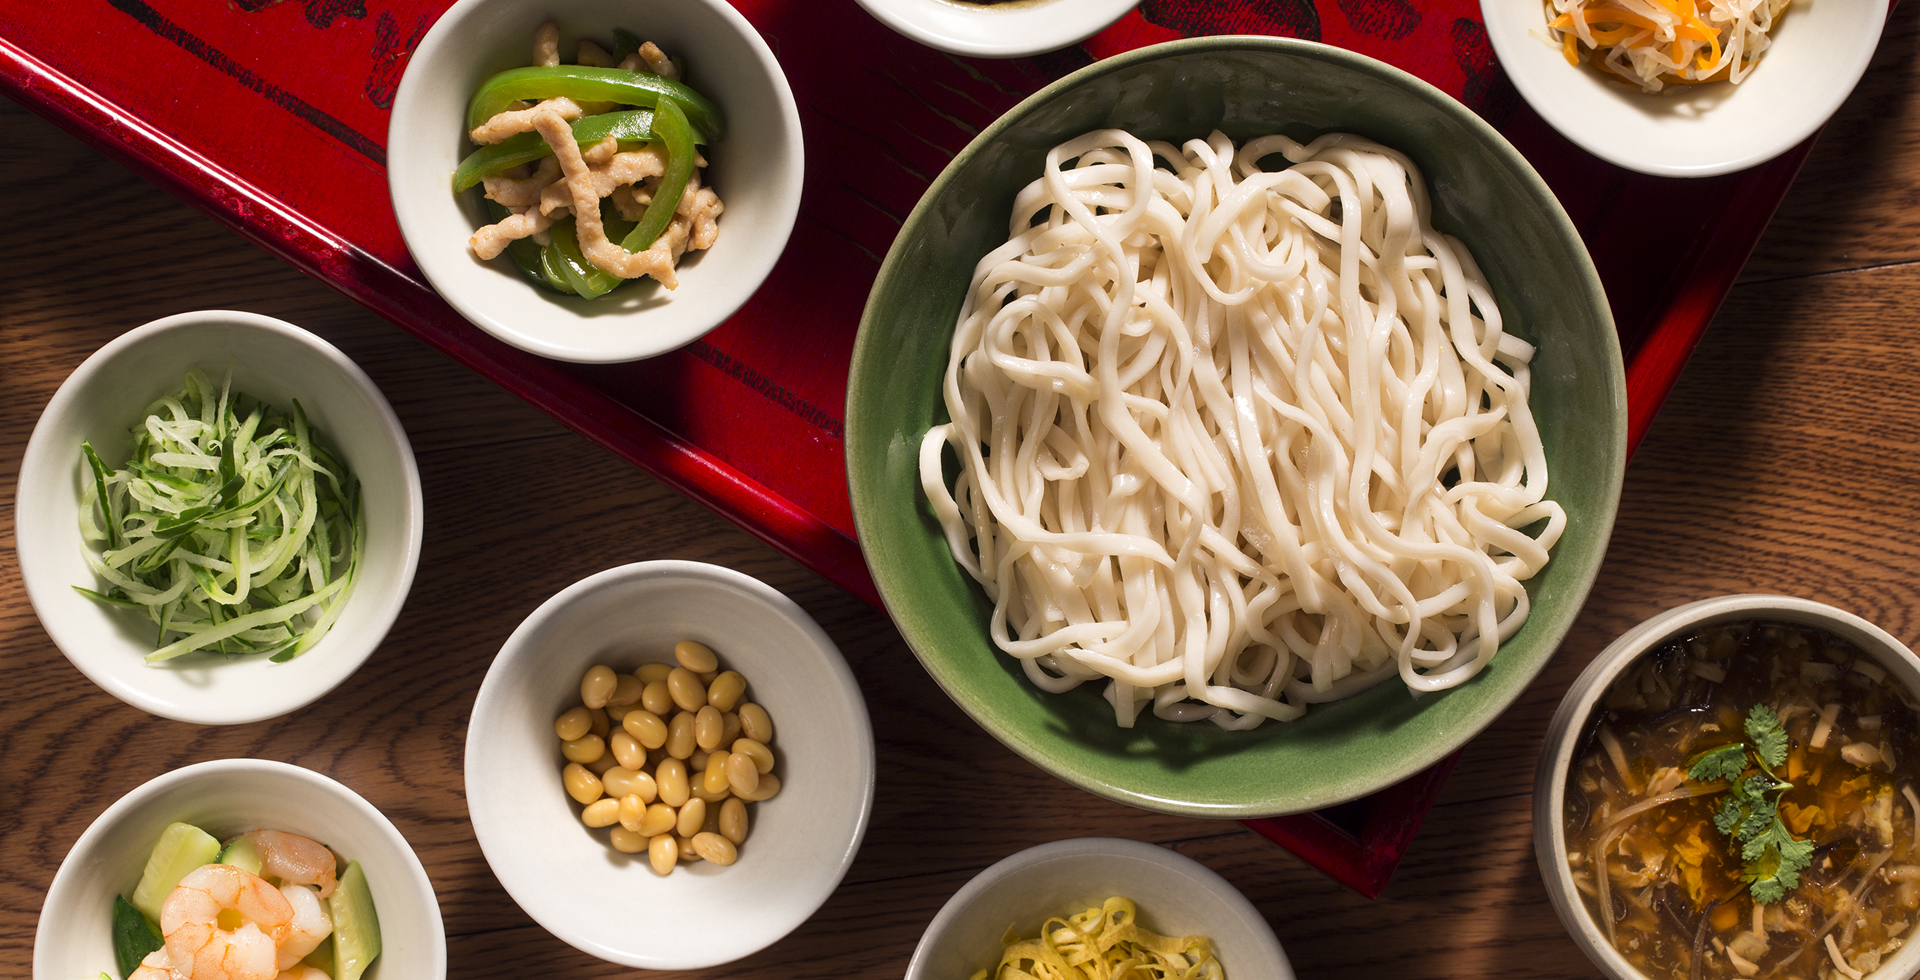 Beijing Kitchen: noodles